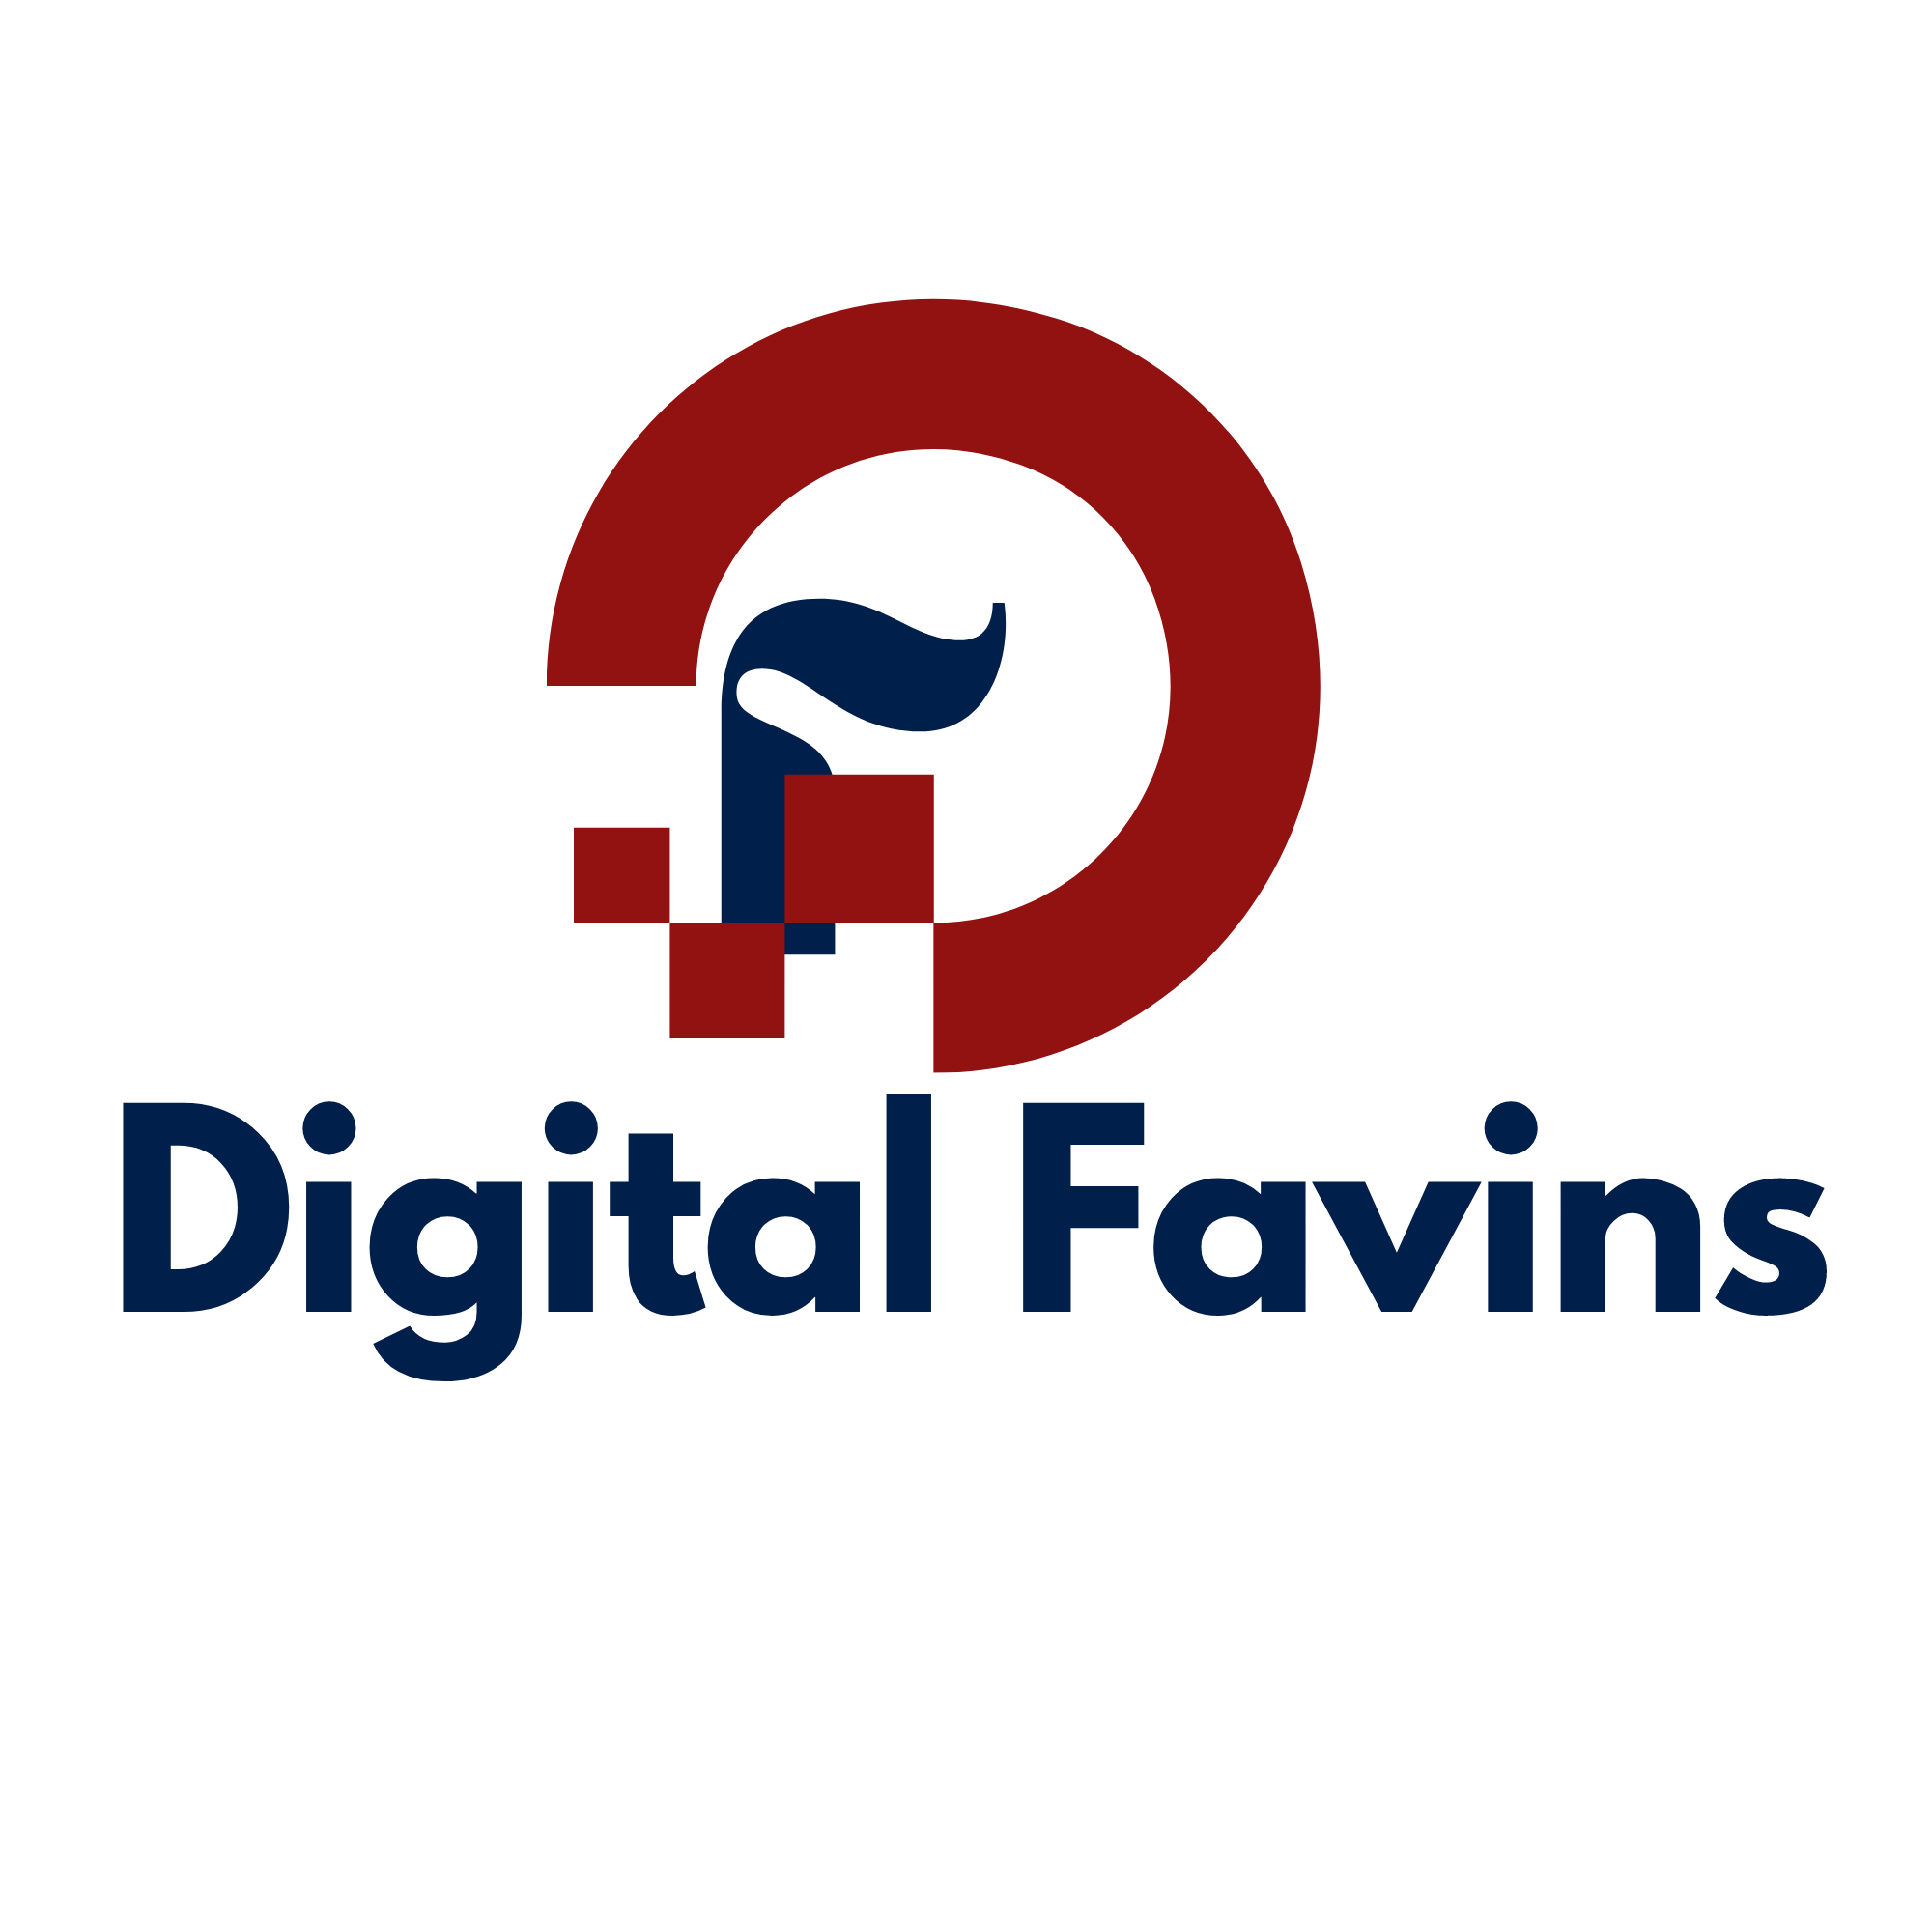 Digital Favins